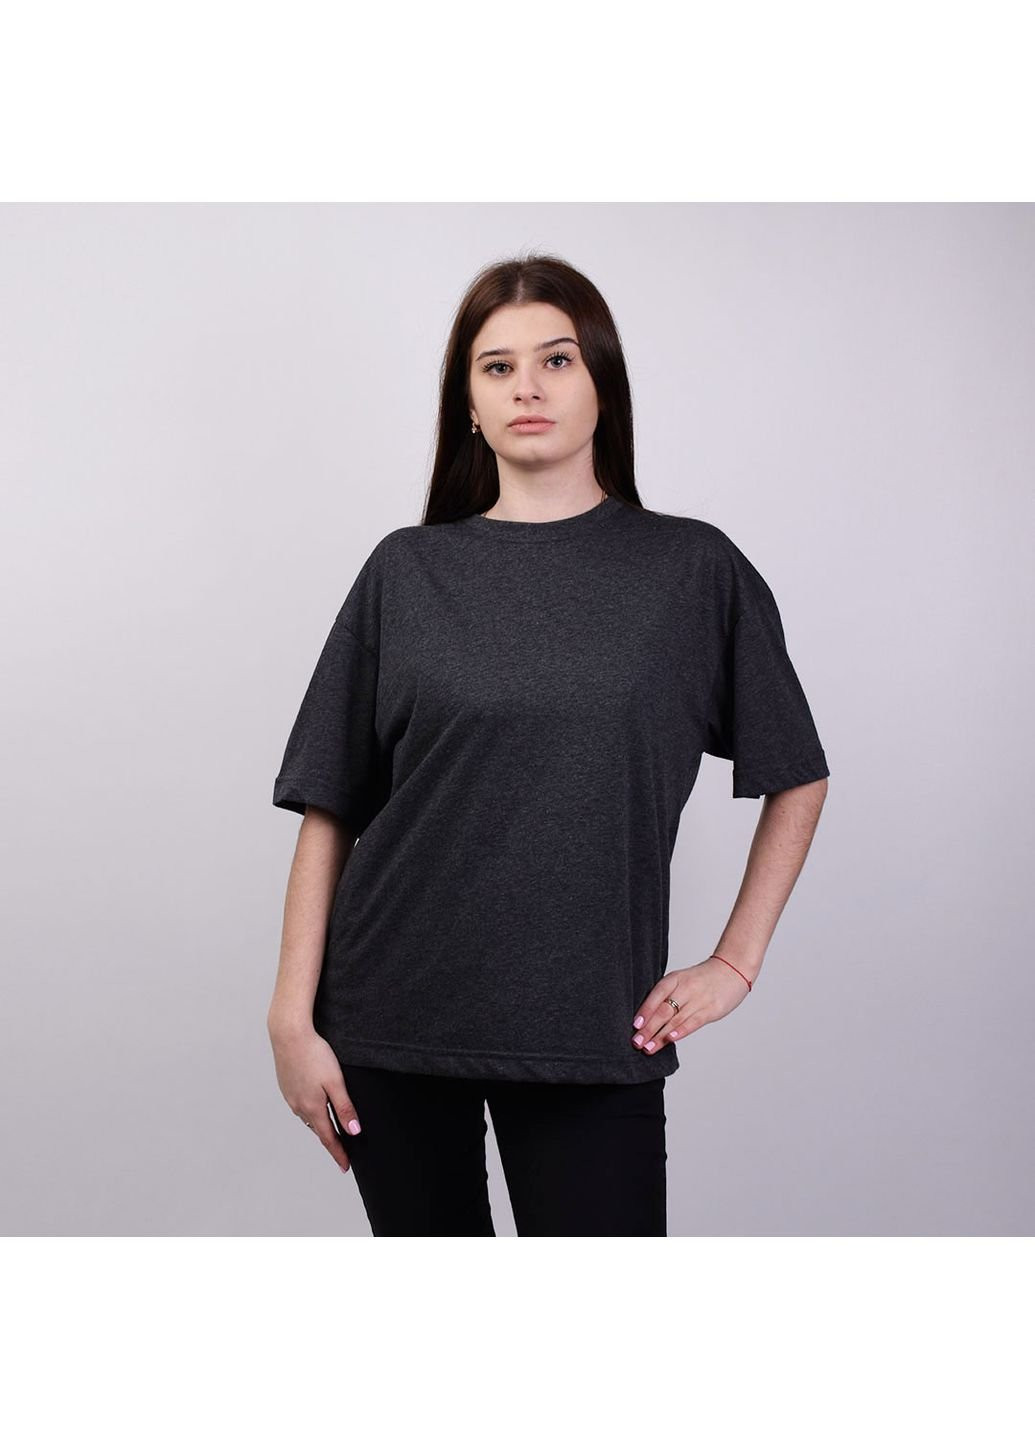 Комбинированная демисезон b-9baly-ss-21-футболка женская, меланж (темно-серый), м/л 1856 Power